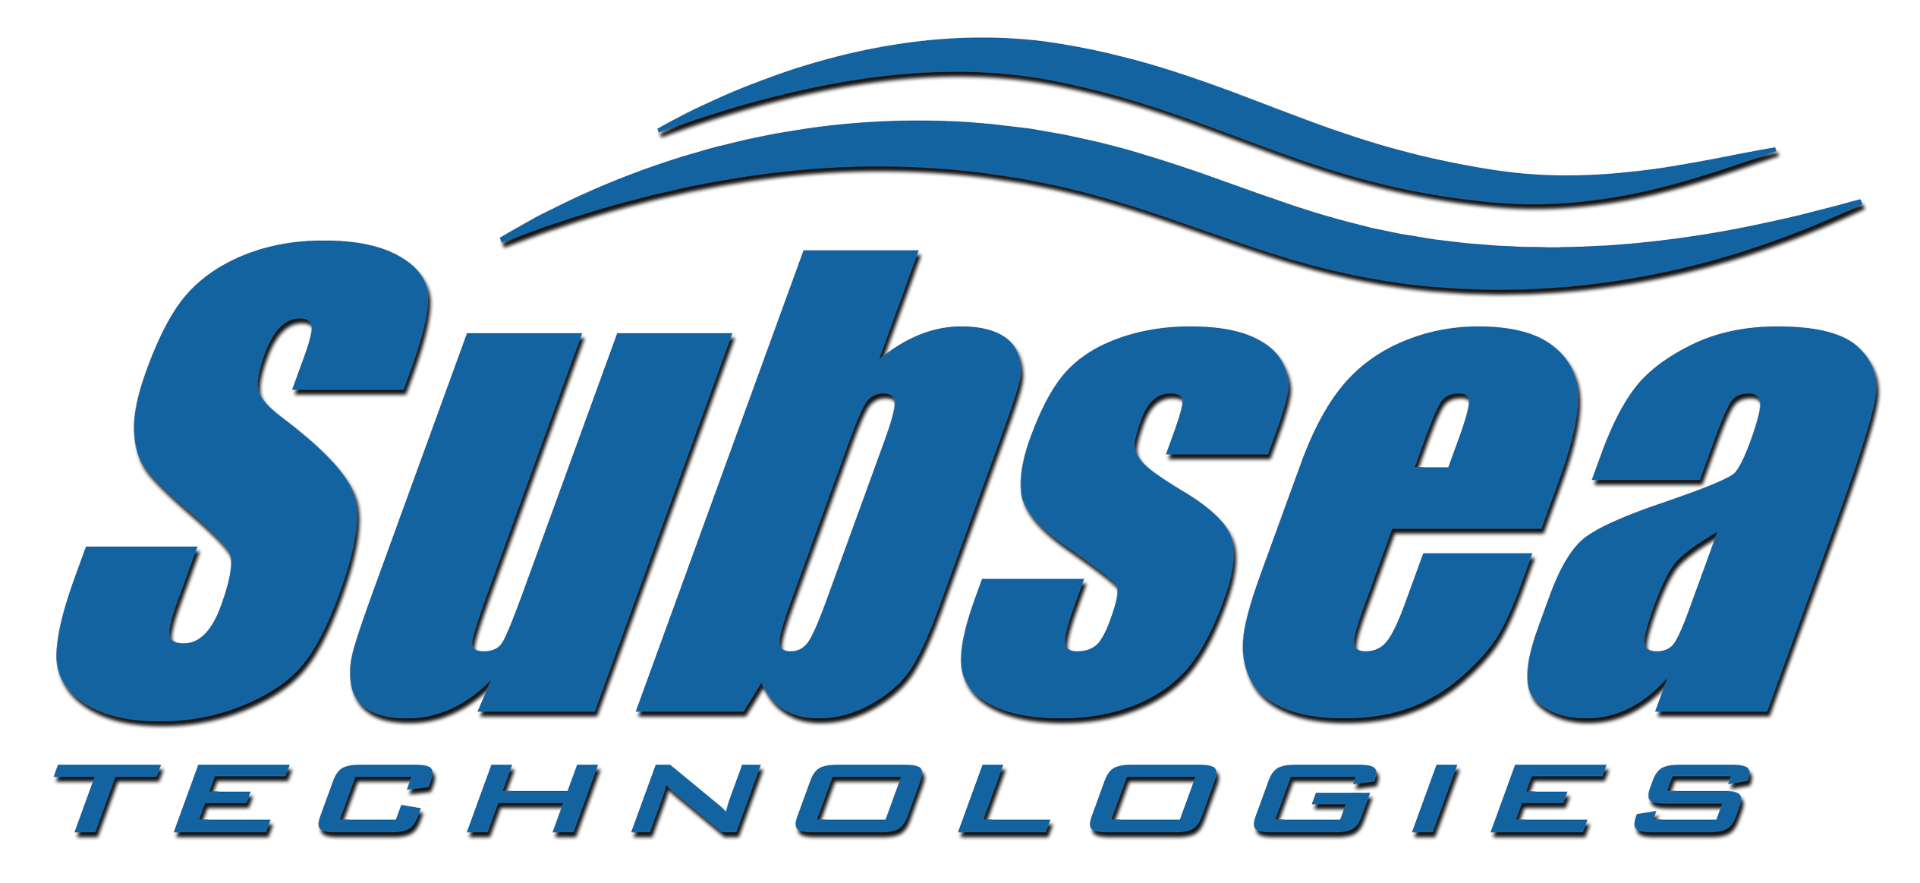 Subsea Technologies Logo